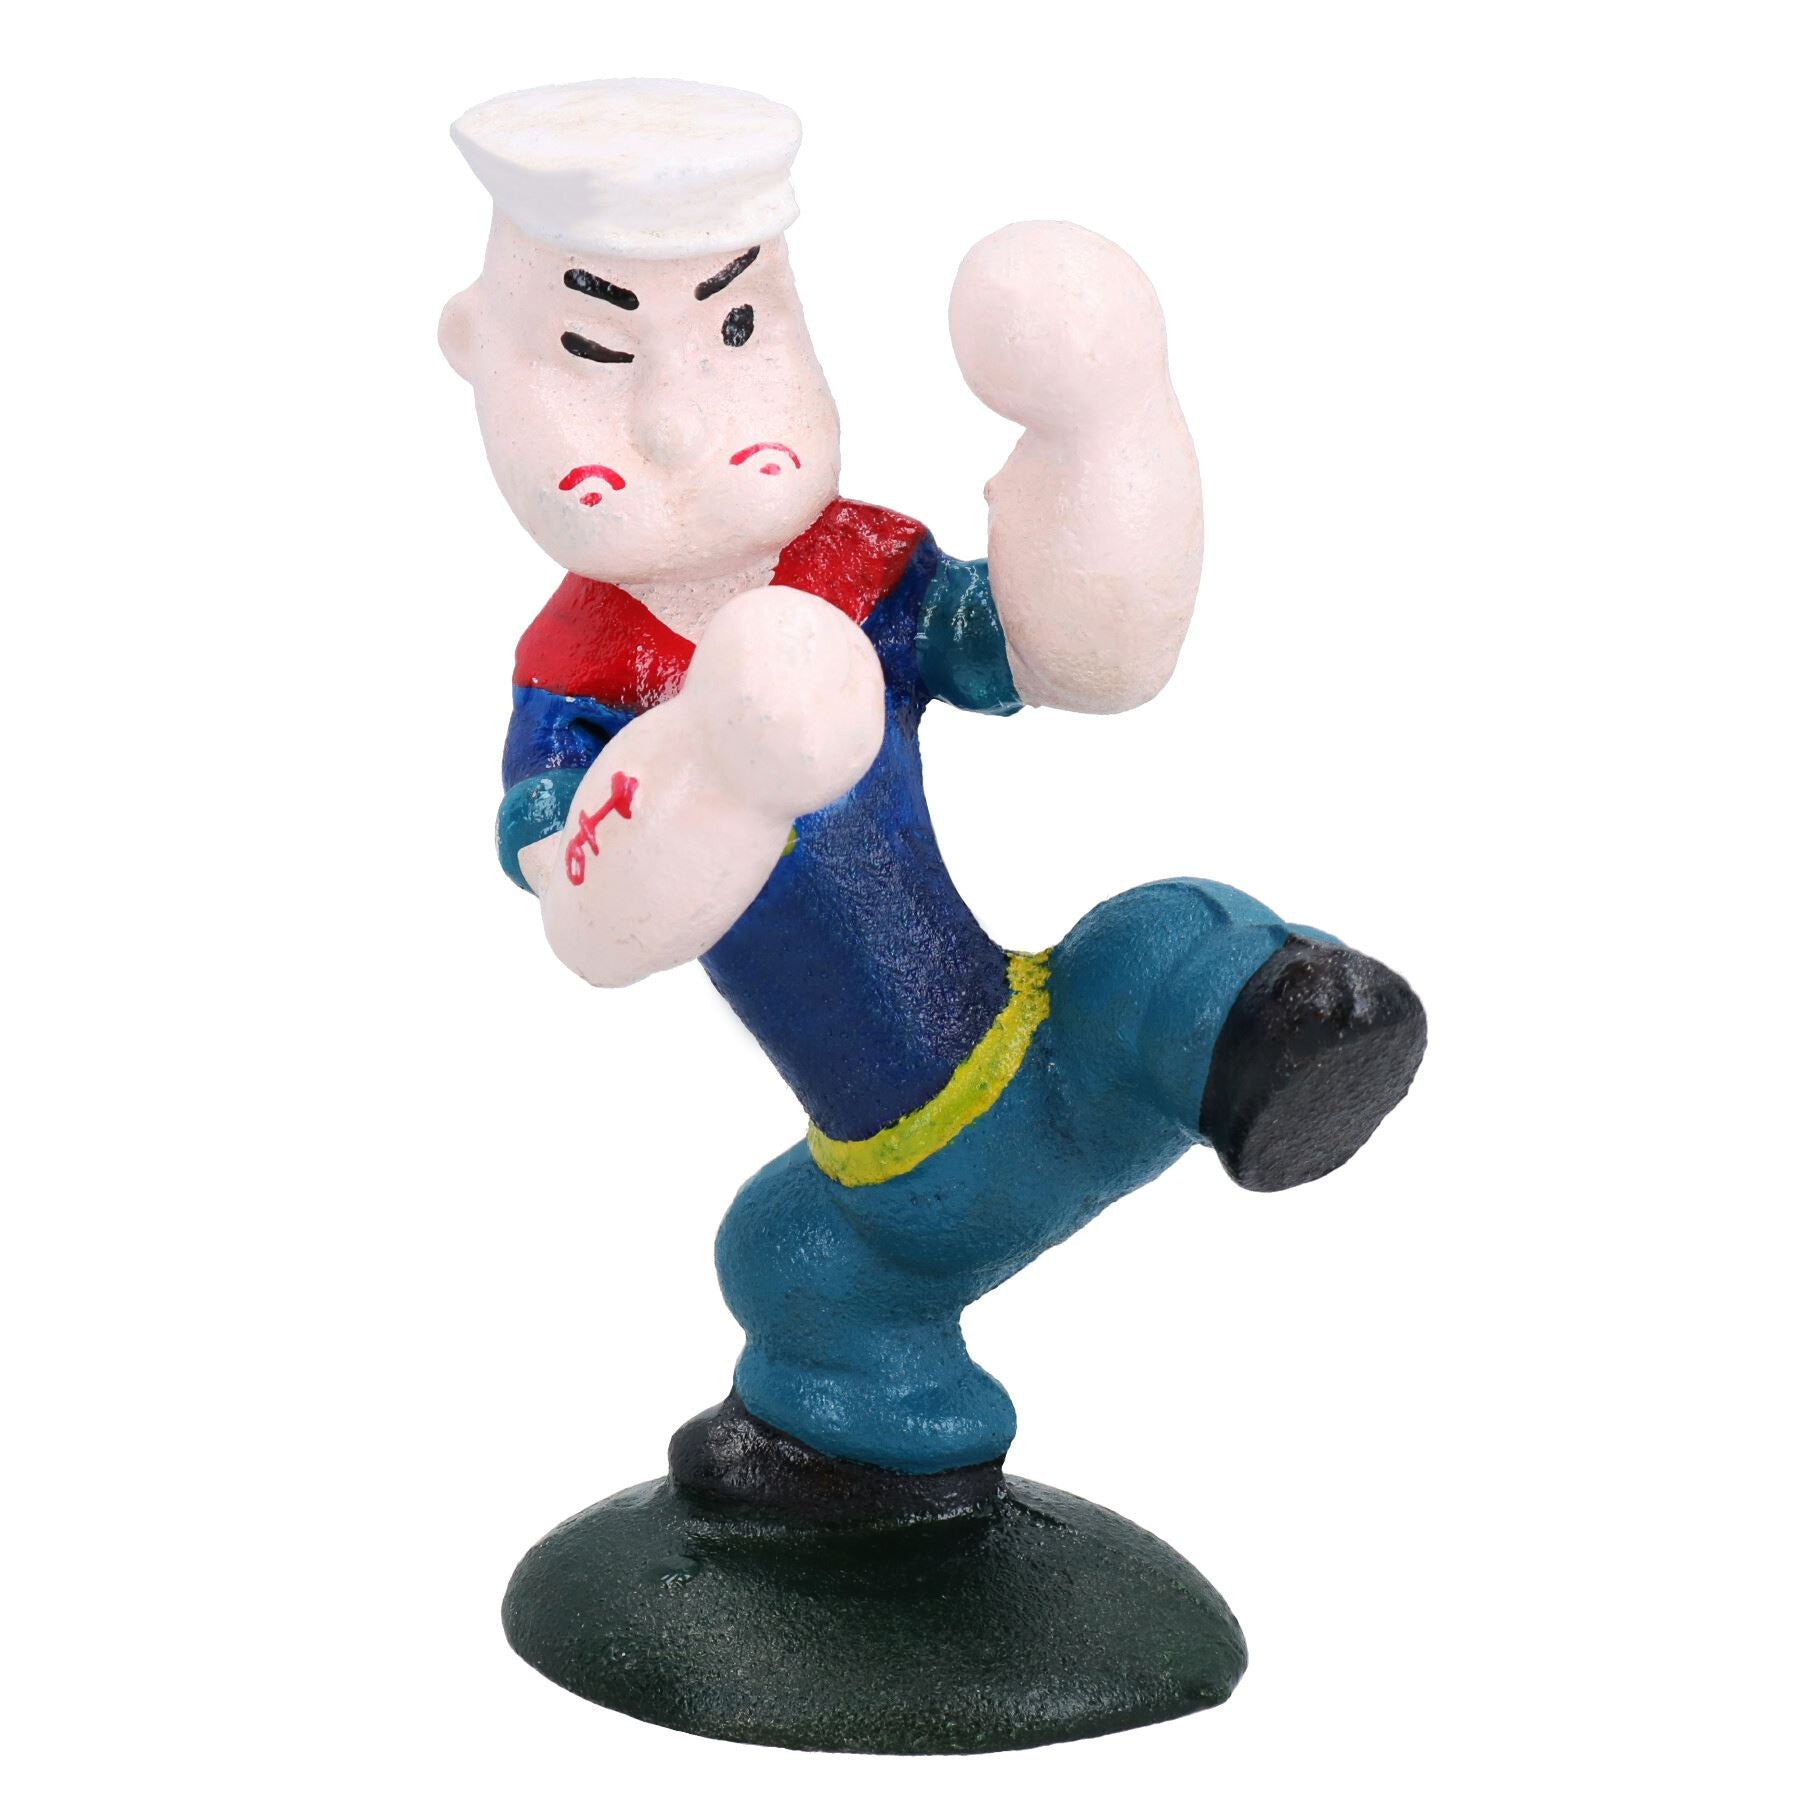 Kung Fu Popeye Sailor Man Mascot Figure Statue Cast Iron Metal Decoration